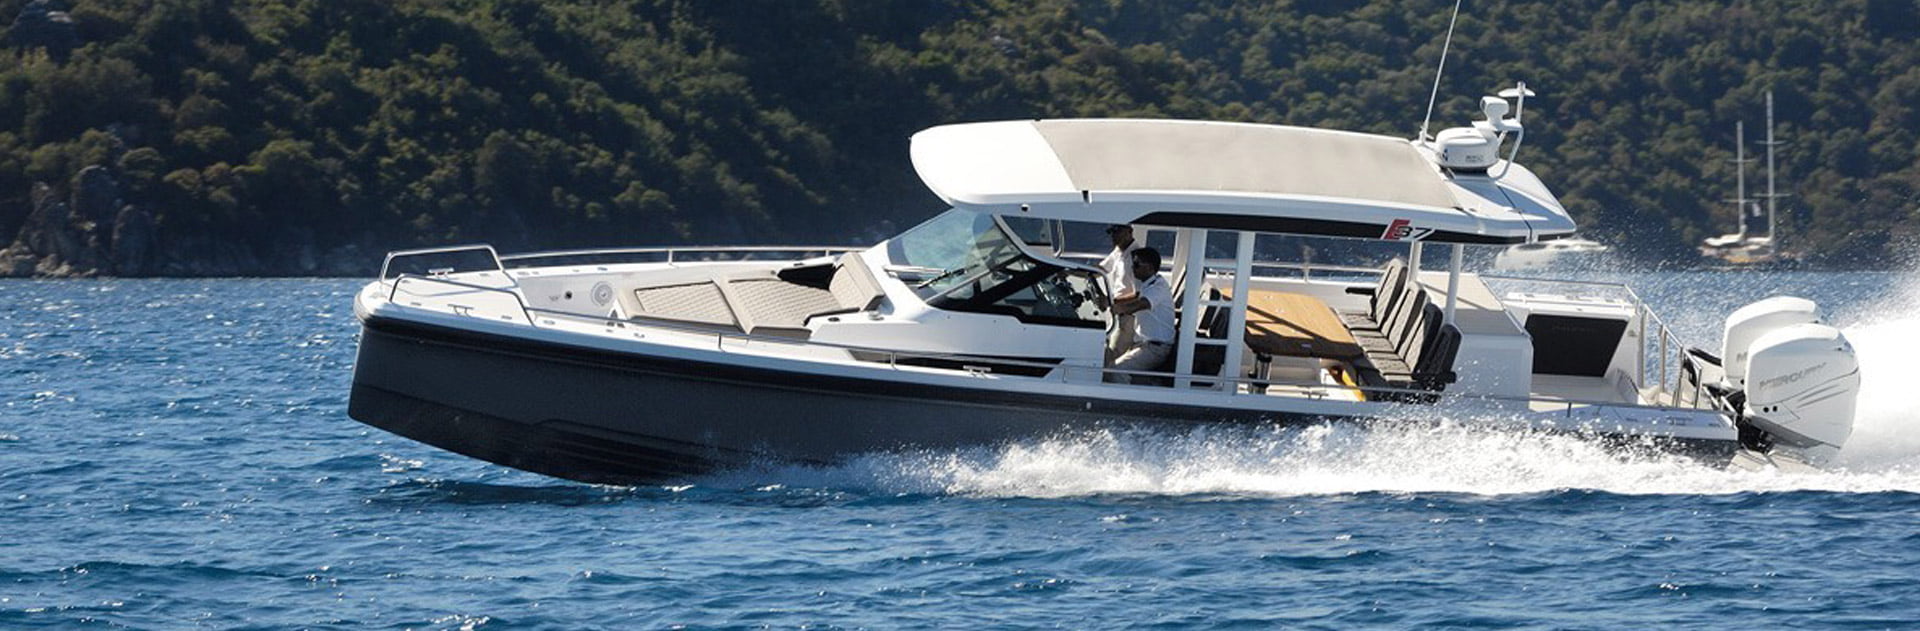 Yacht Mykonos Greece Axopar37 02